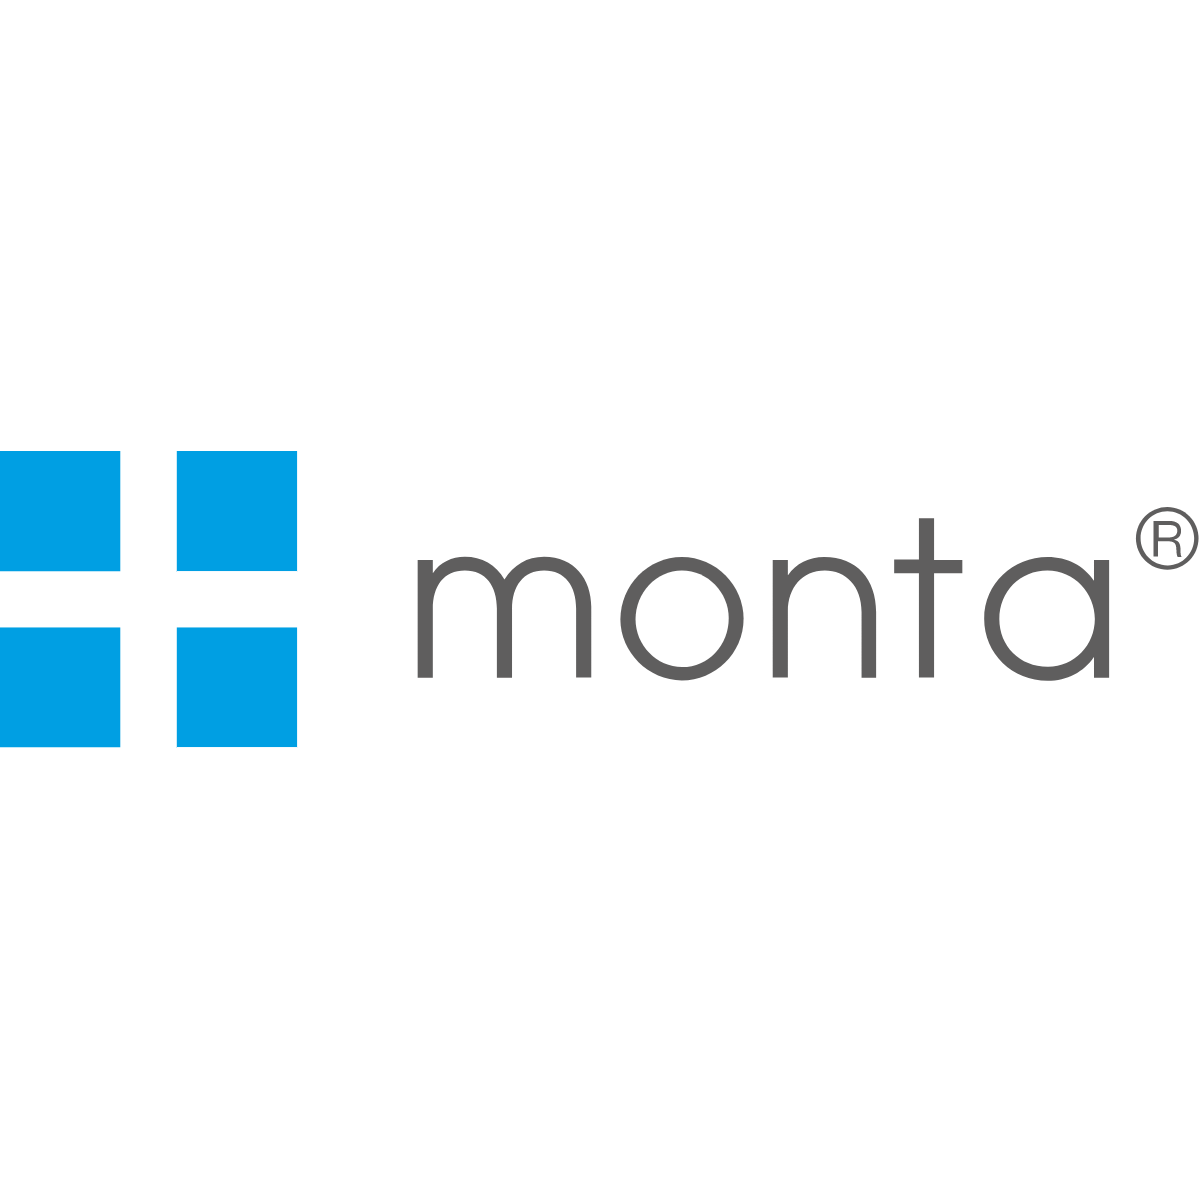 Monta Checkout for Shopify